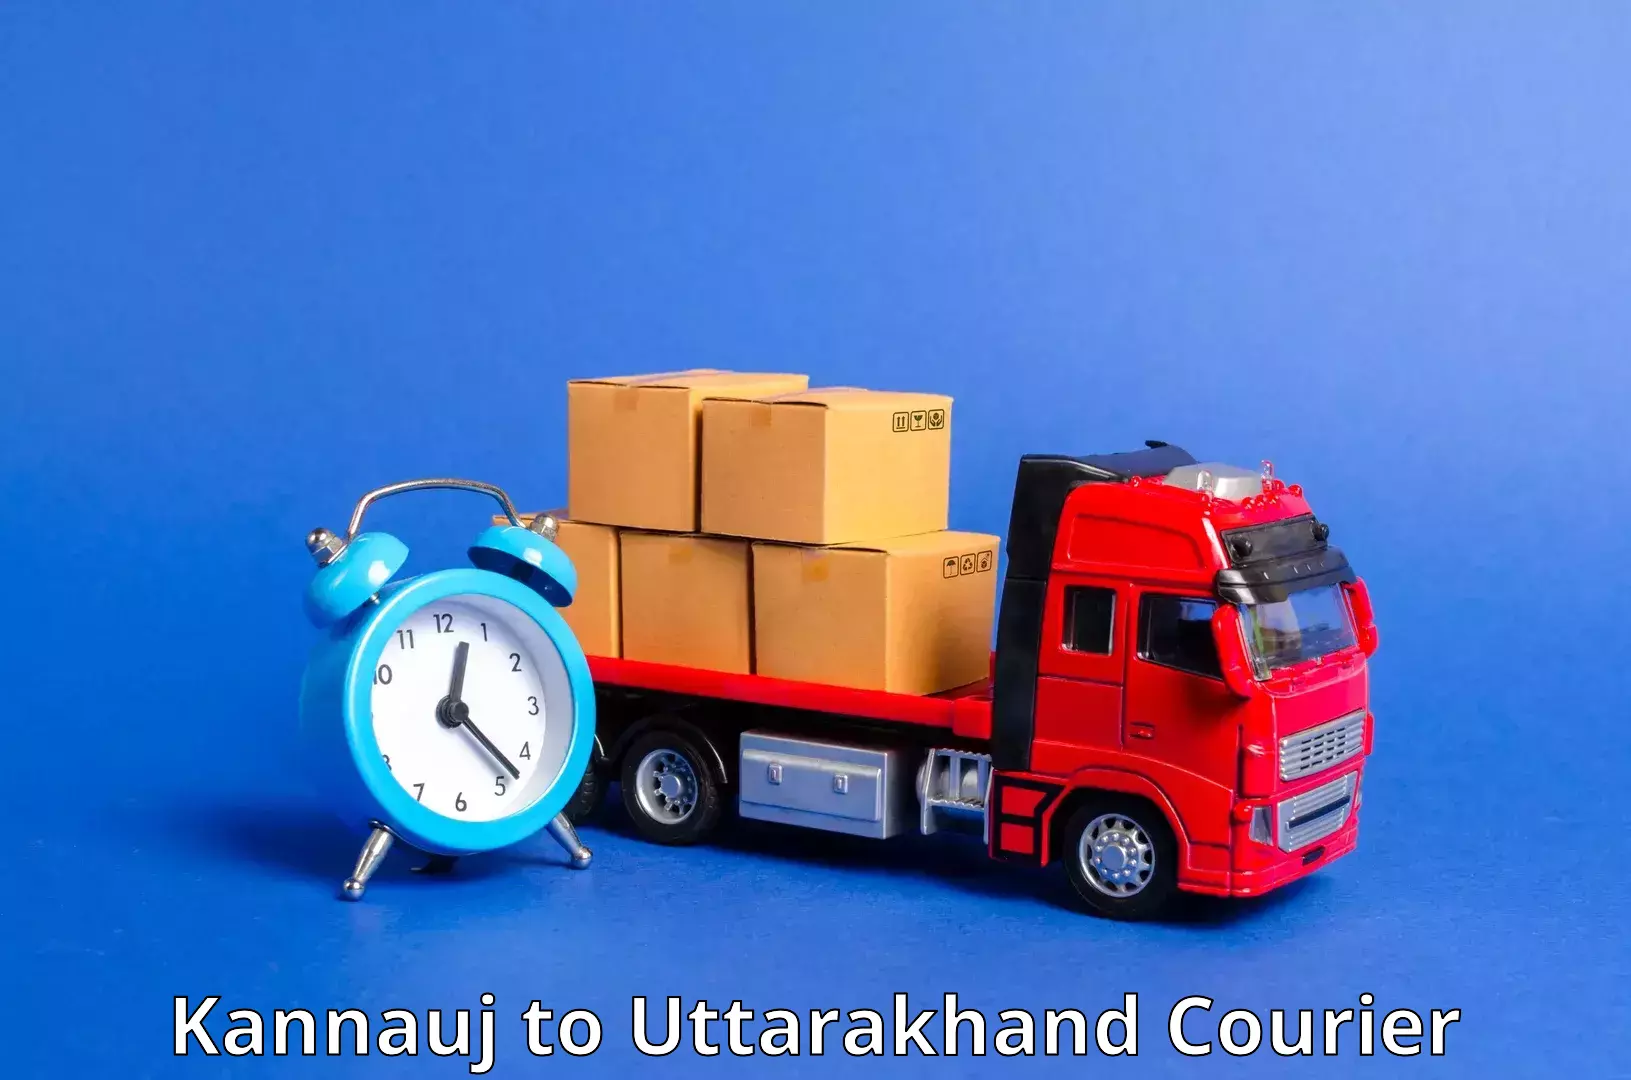 Cargo delivery service Kannauj to Uttarakhand